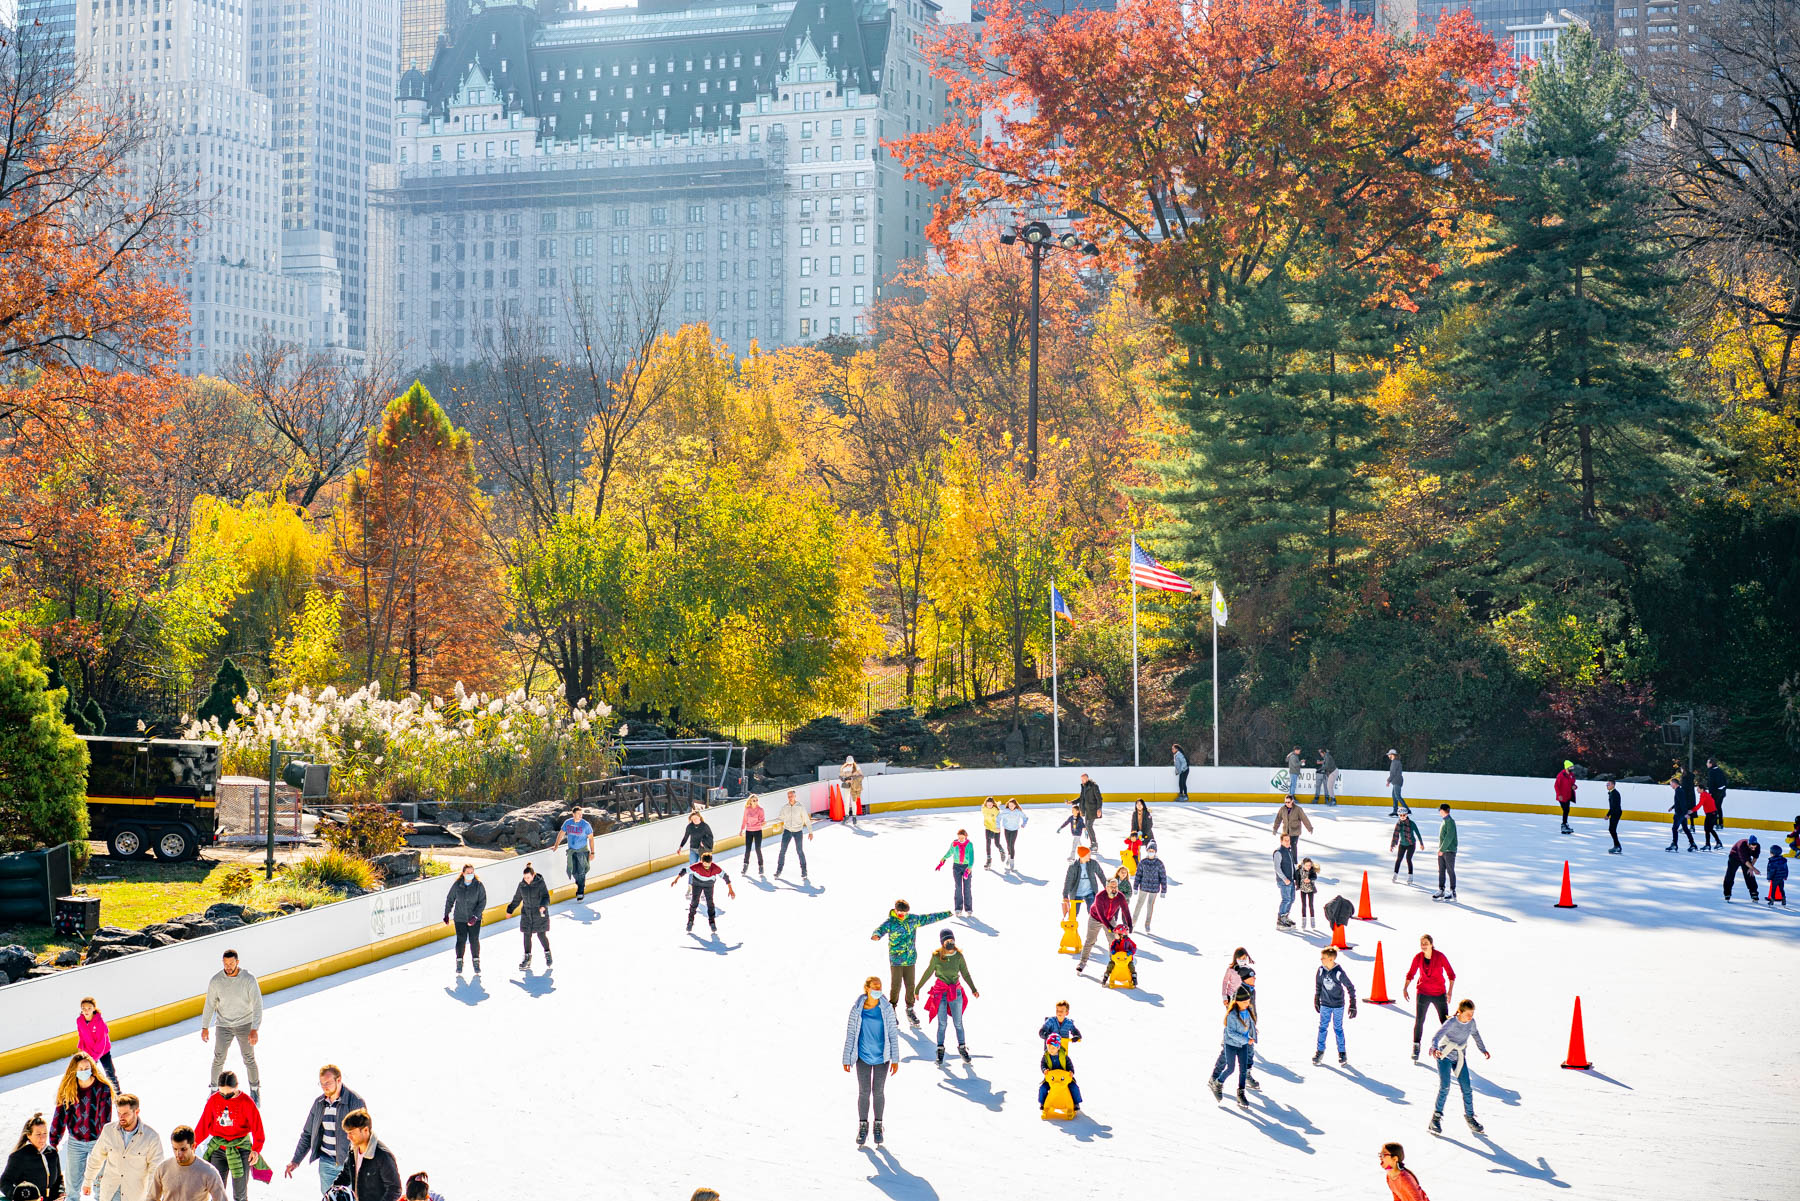 Best ice skating rinks New York City
Winter in New York City